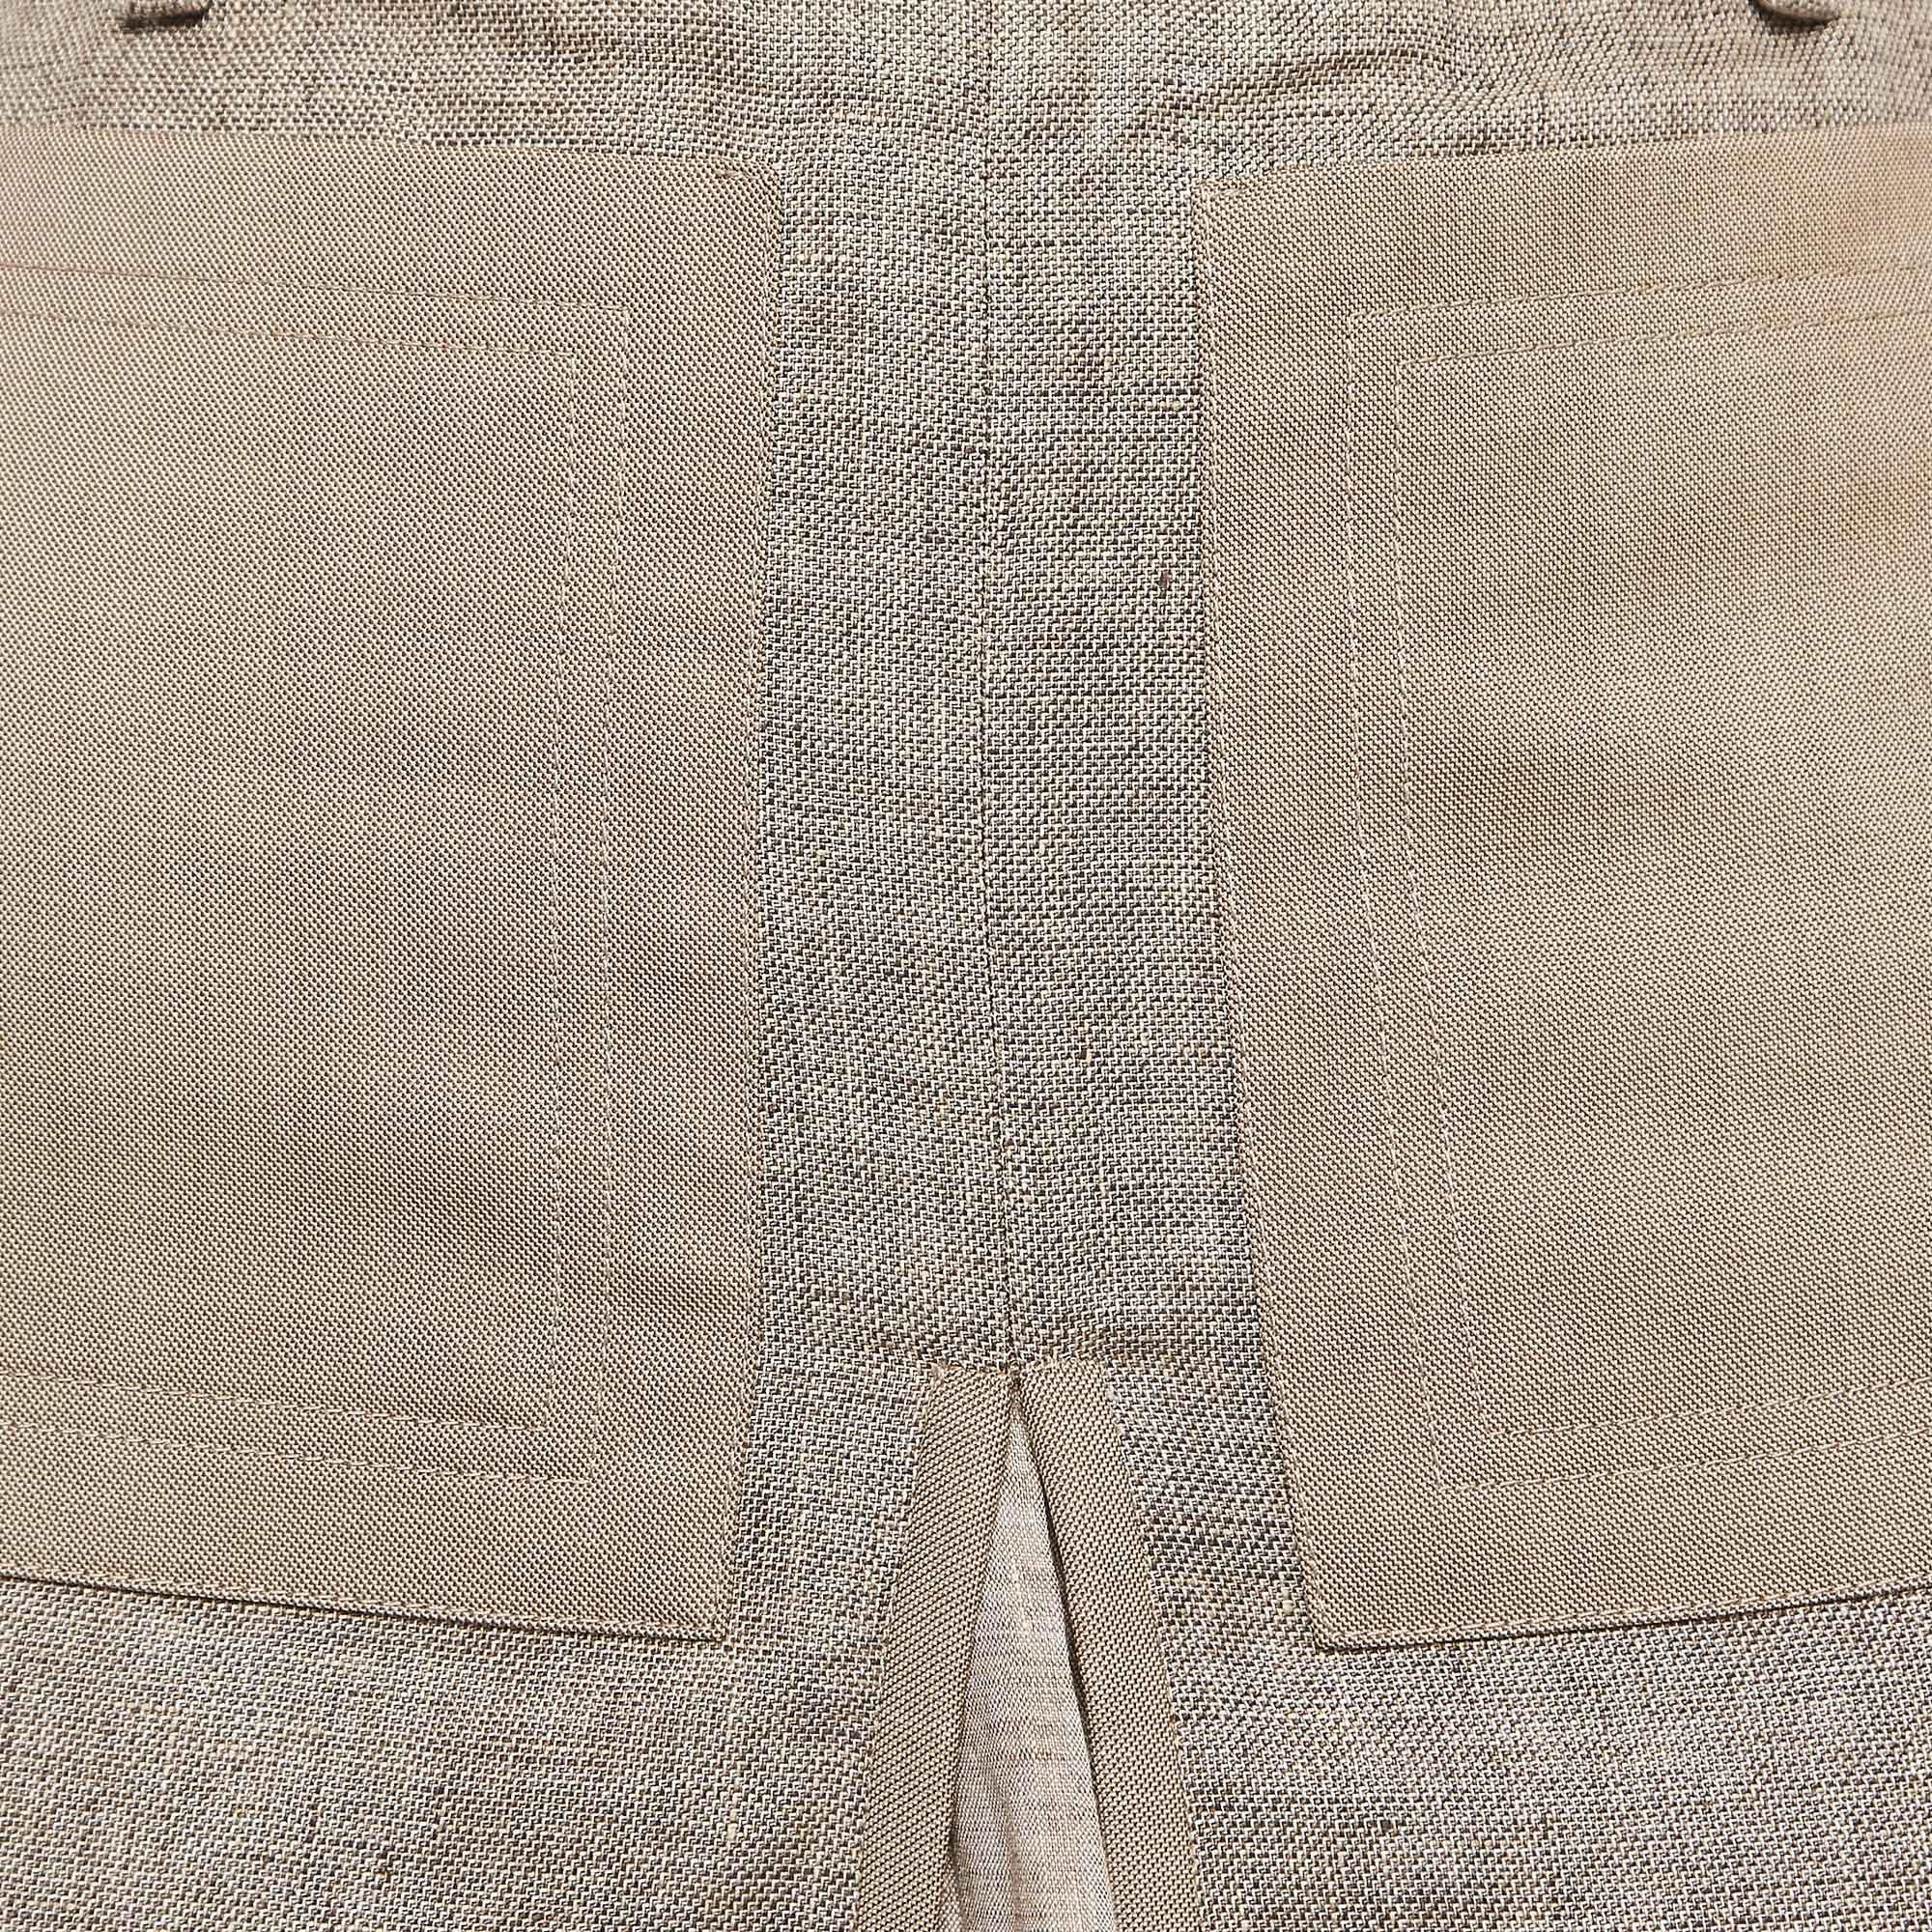 Burberry London Beige Linen Panel Skirt XS In Good Condition For Sale In Dubai, Al Qouz 2